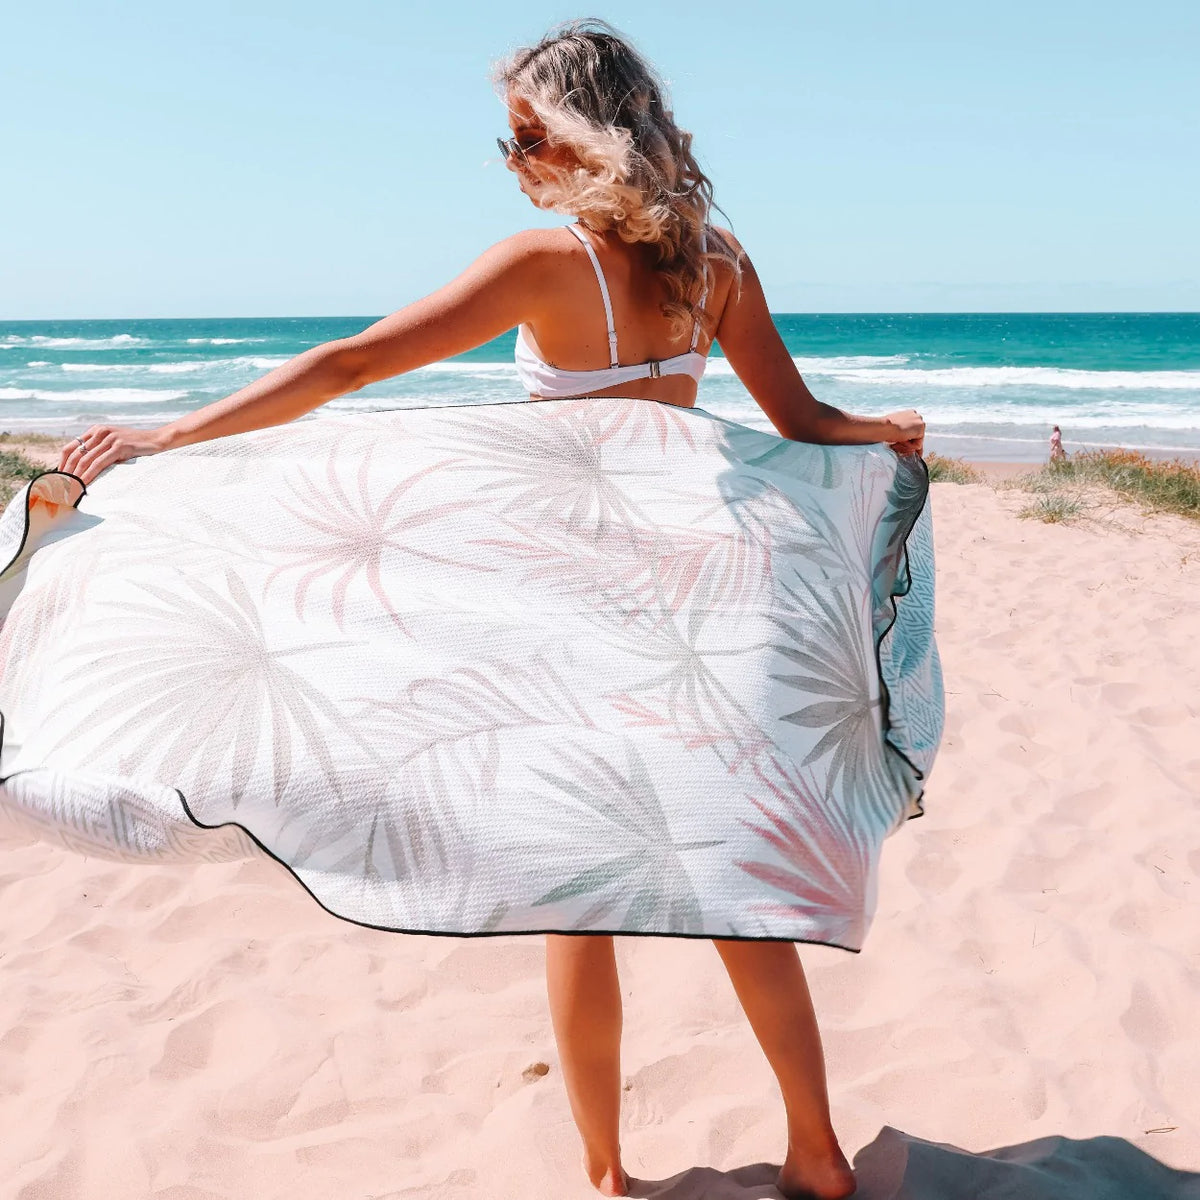 Sky Gazer Luxury beach Towel in Pouch - Whitehaven